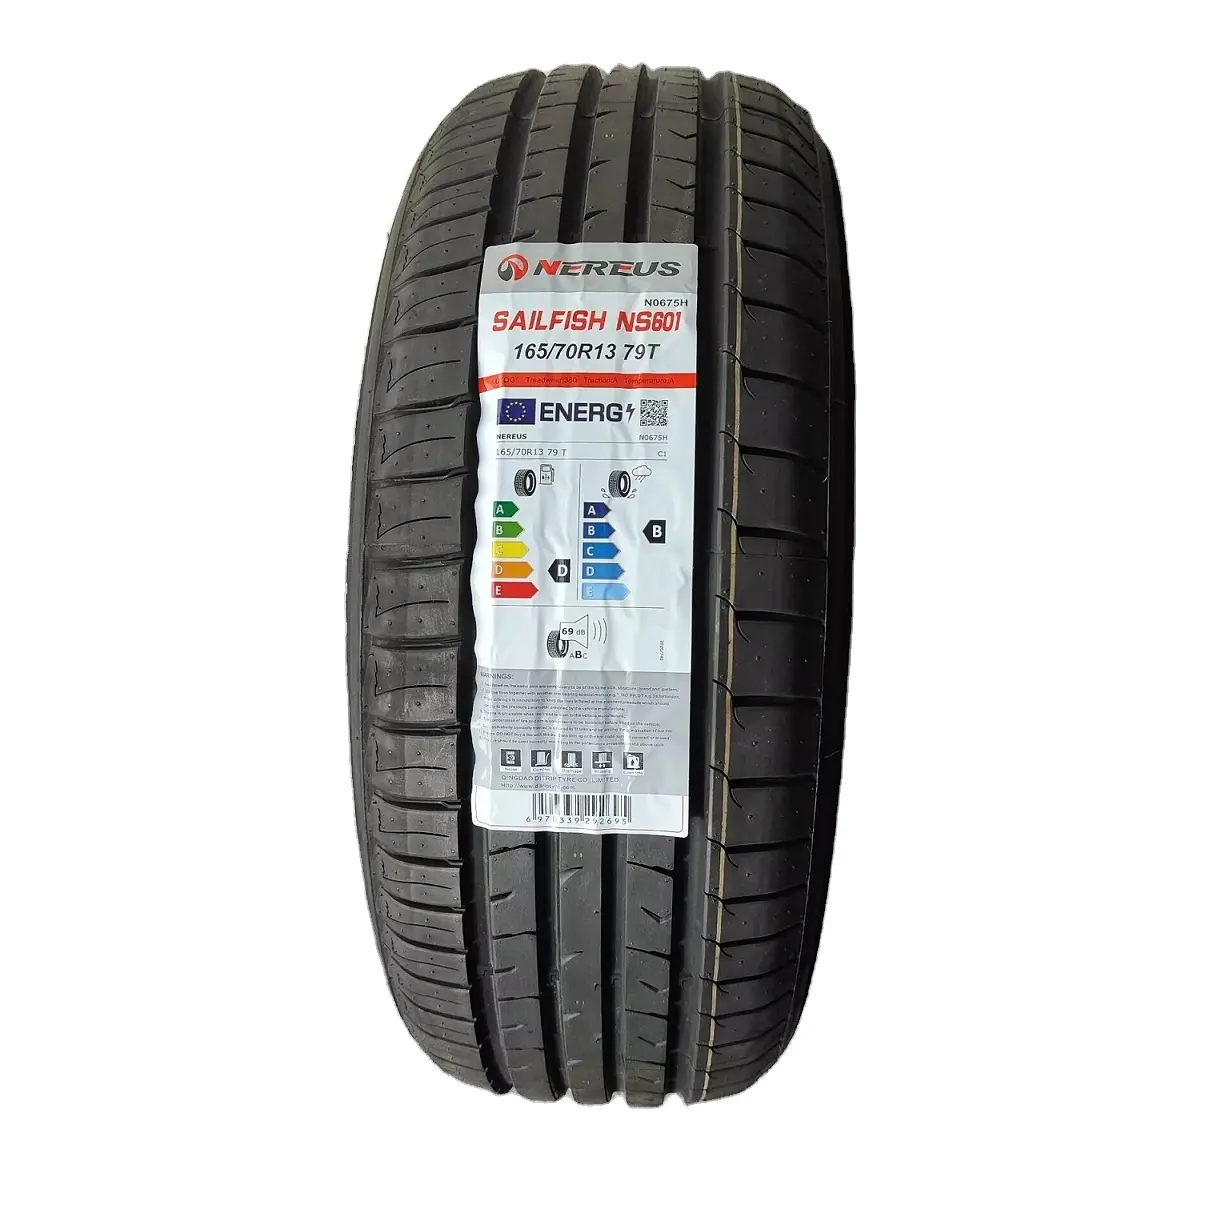 High quality factory price PCR car tyres wheels rims 155/65R13 155/70R13 165/65R13 165/70R13 175/60R13 passenger tire for cars